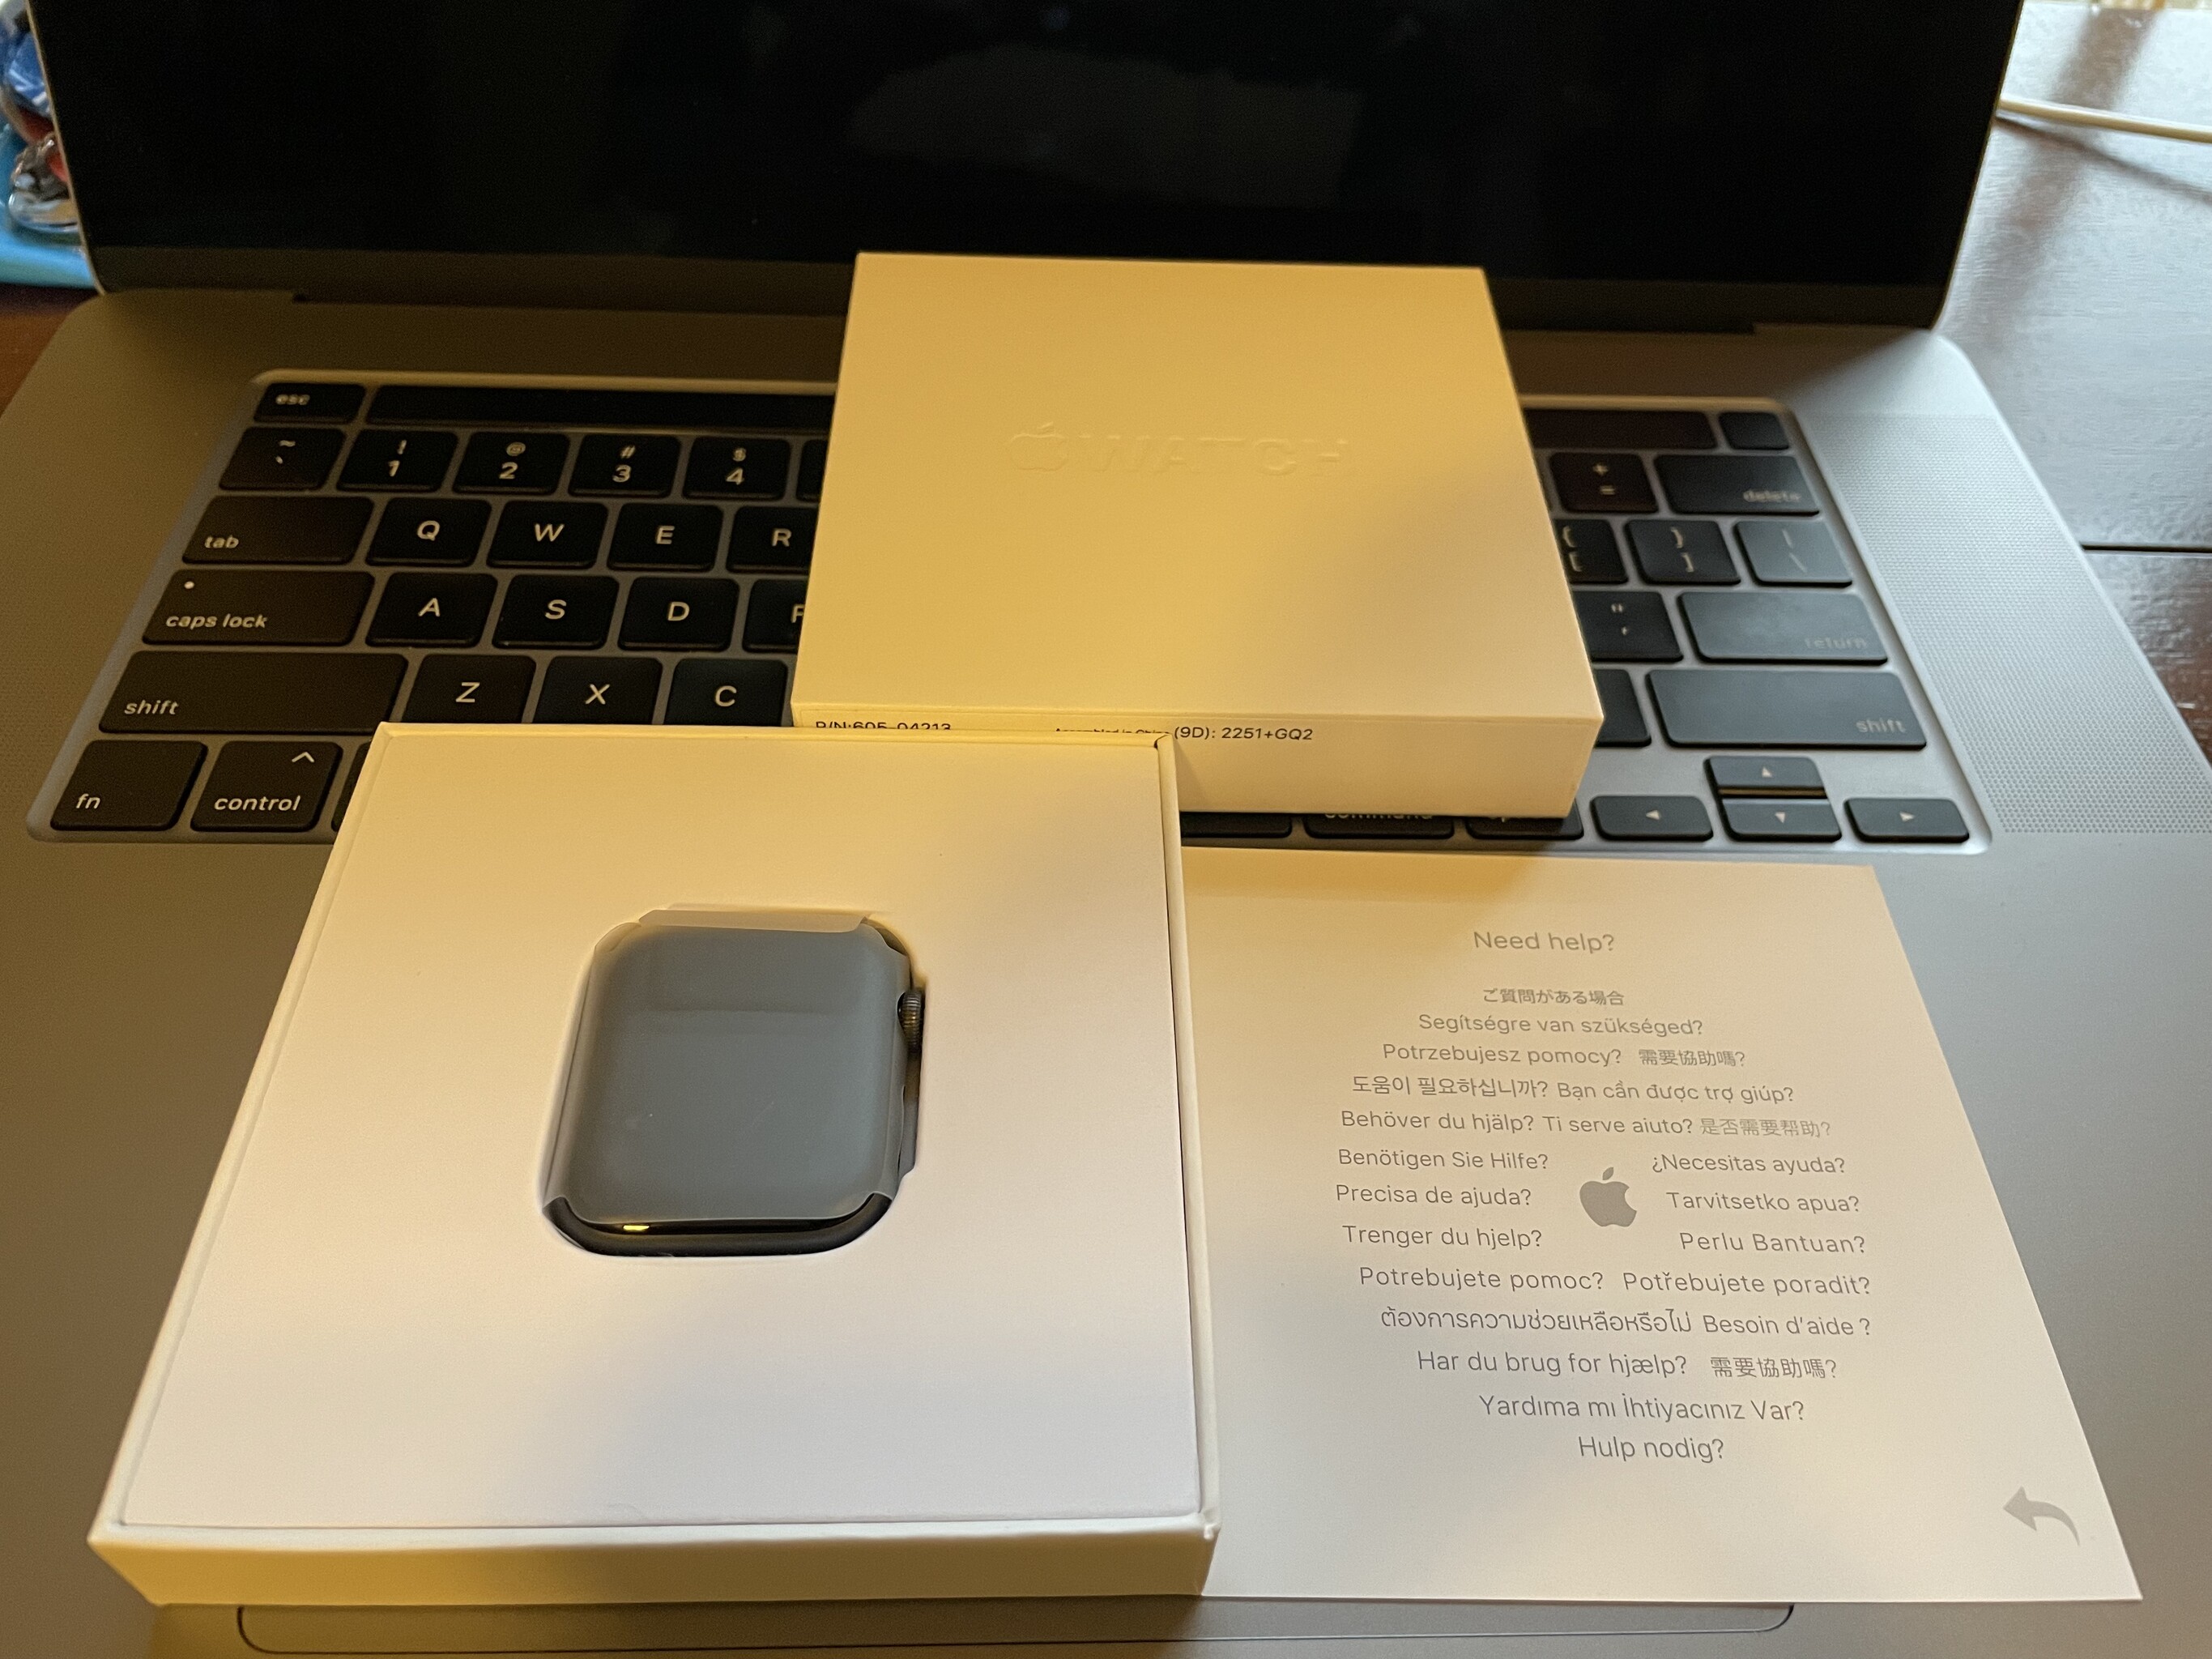 Chia sẻ trải nghiệm "thay pin" Apple Watch ở Apple Store